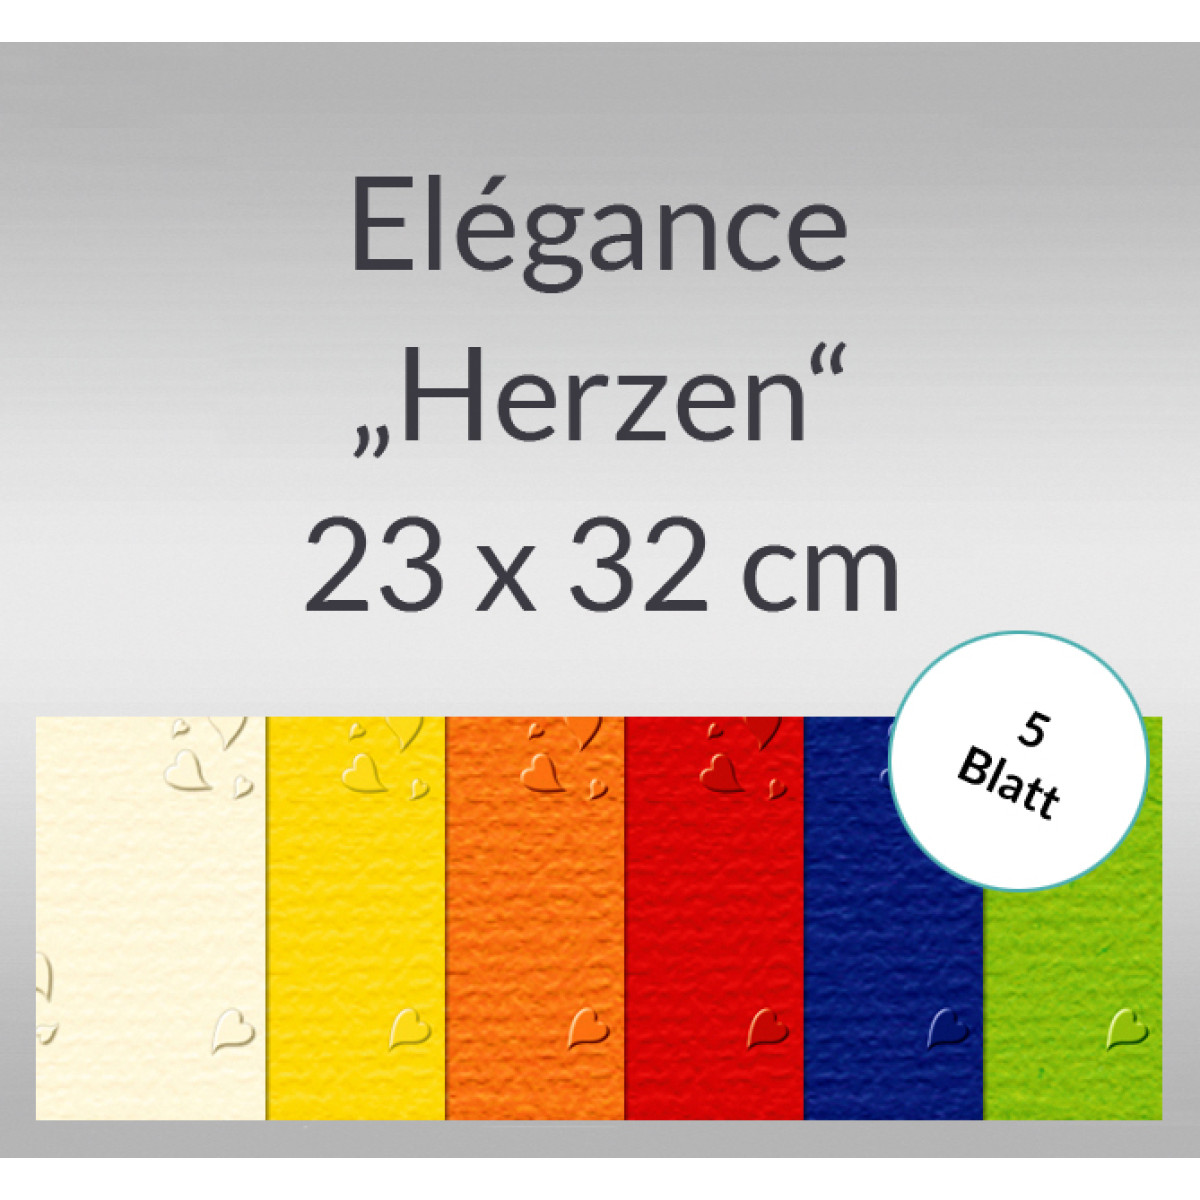 Elegance "Herzen" 220 g/qm 23 x 32 cm - 5 Blatt